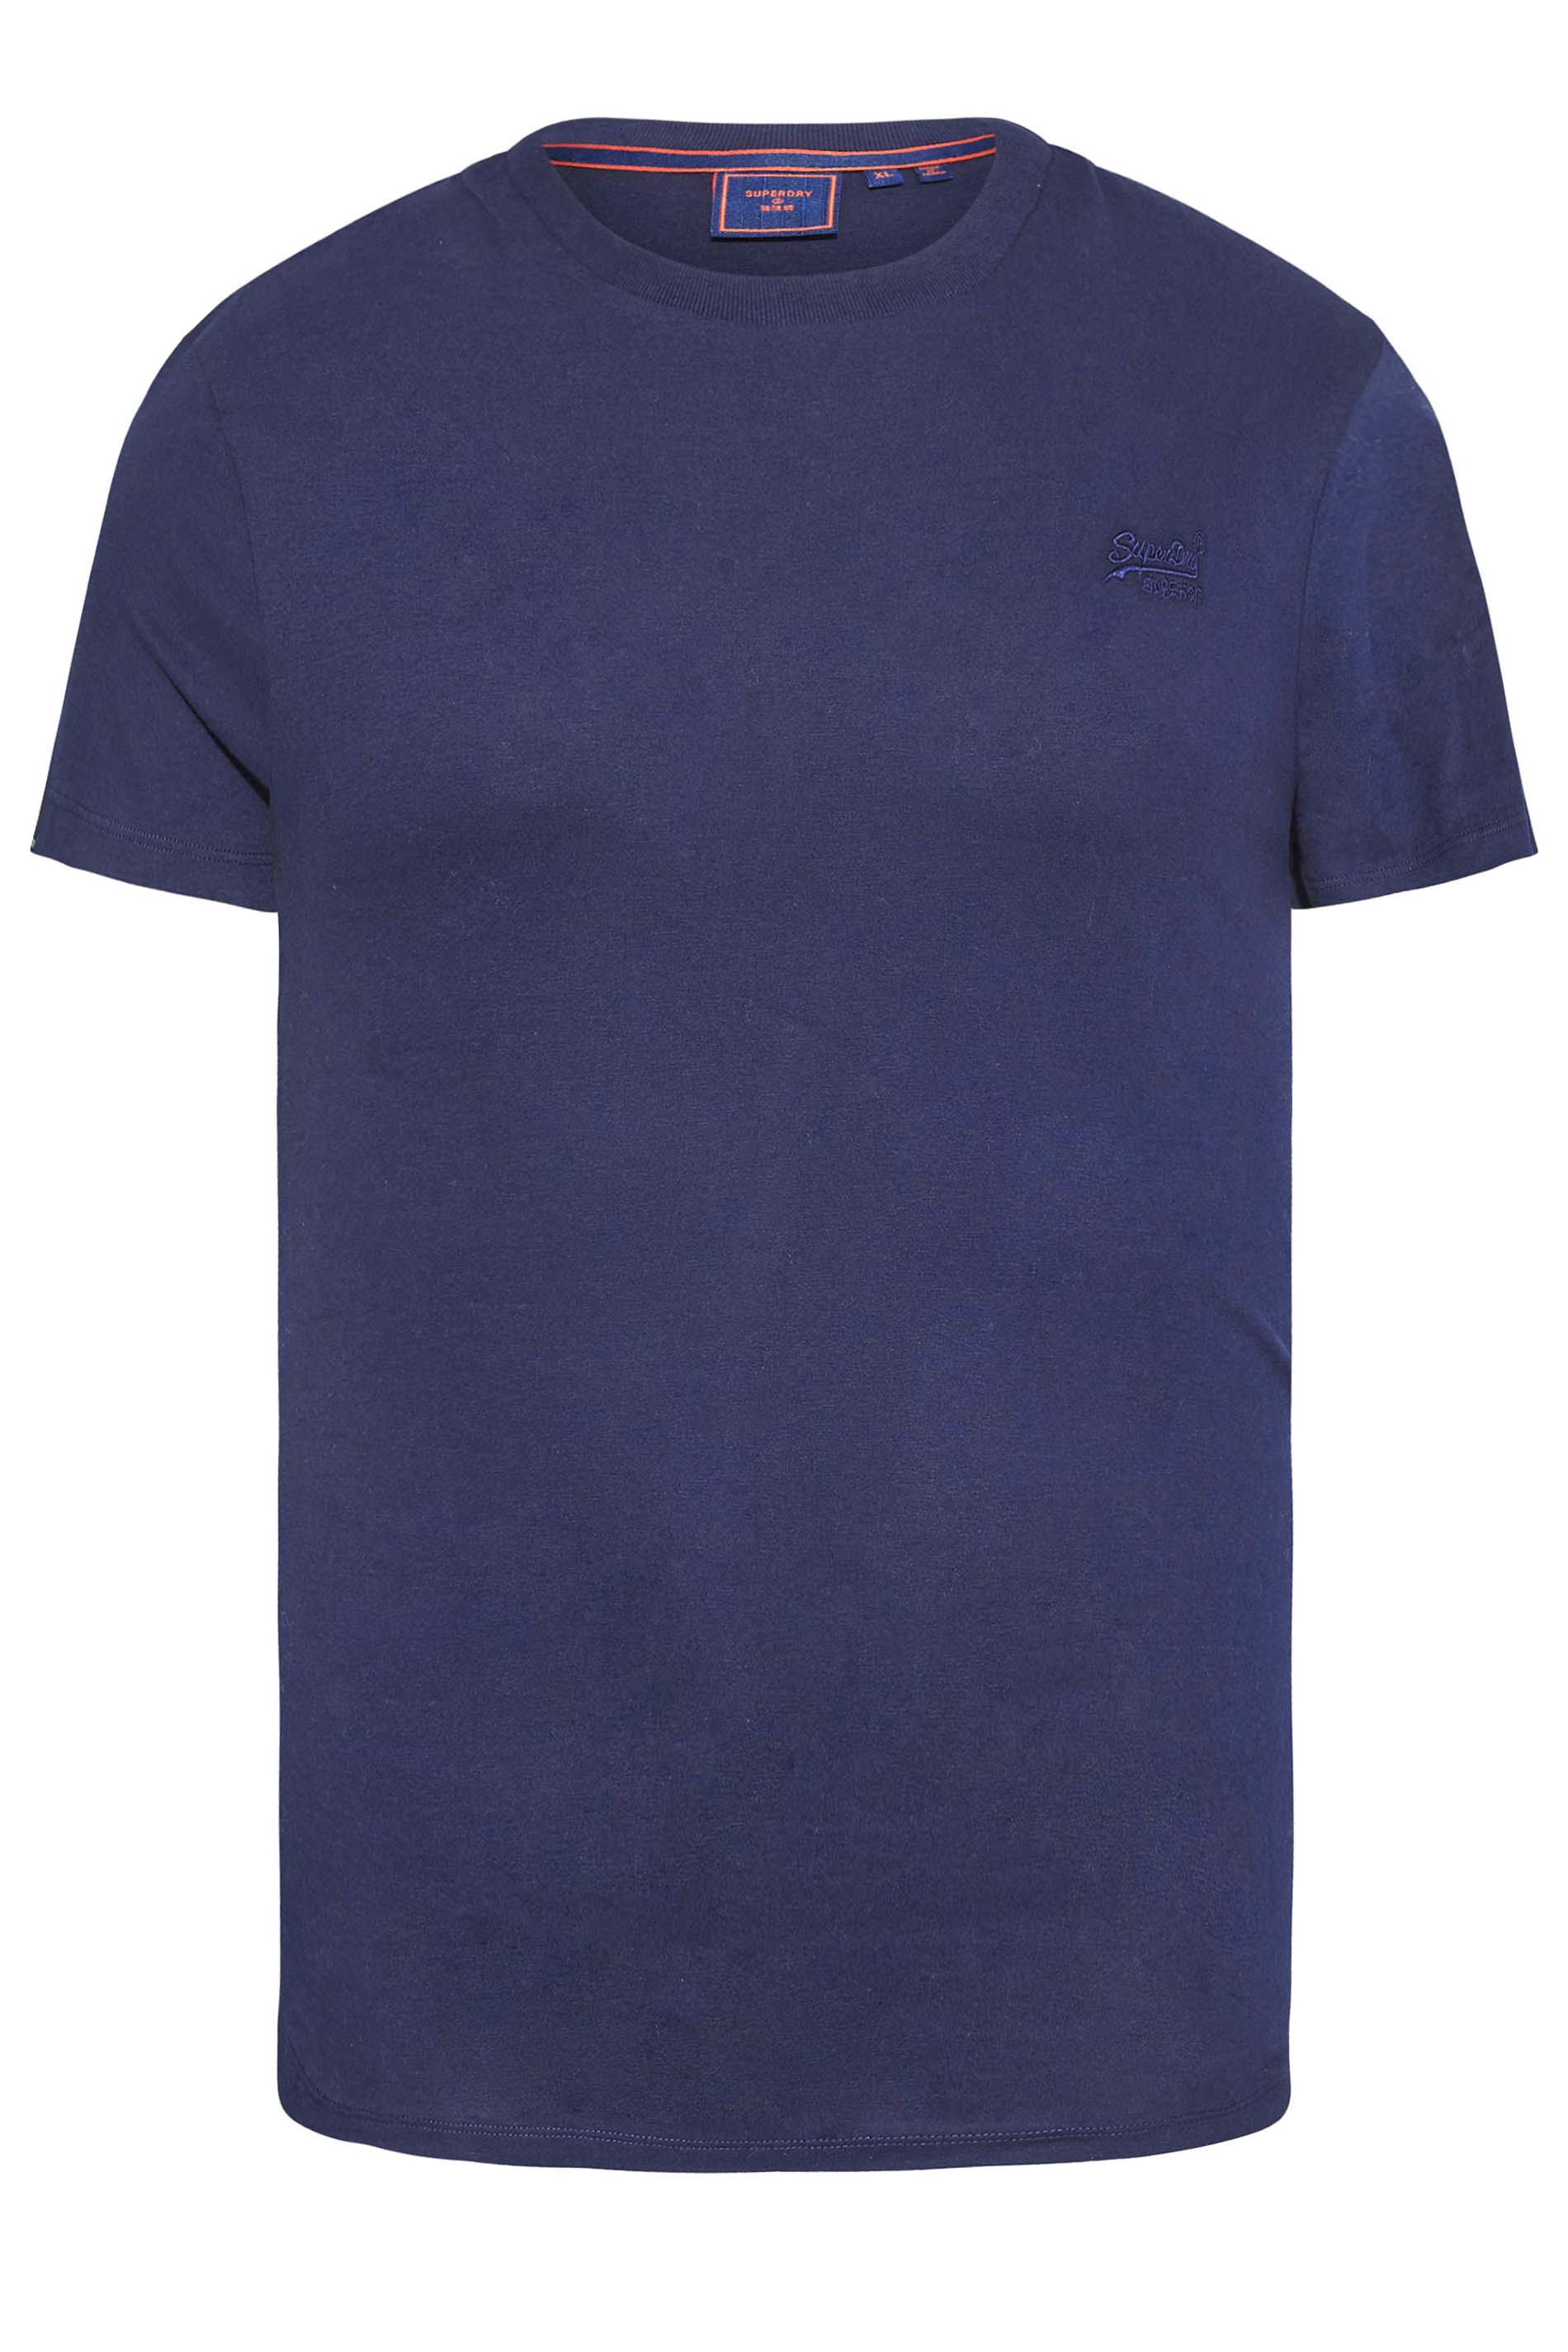 SUPERDRY Navy Blue Vintage T-Shirt | BadRhino 1